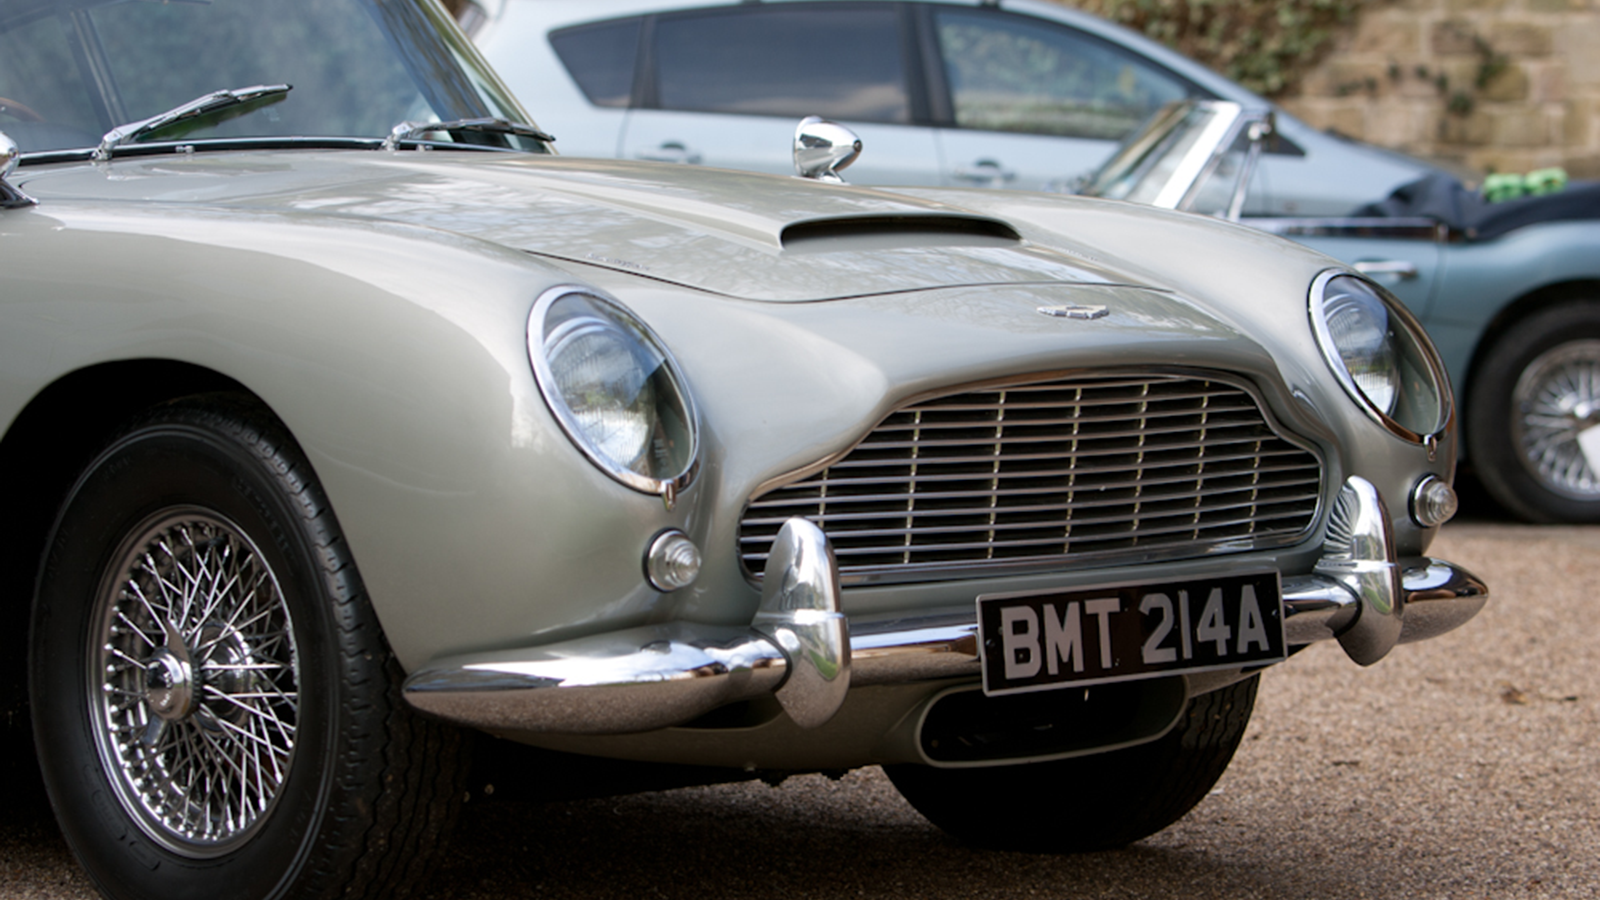 Aston Martin DB5 from James Bond Goldeneye film set to make world record at Bonhams auction